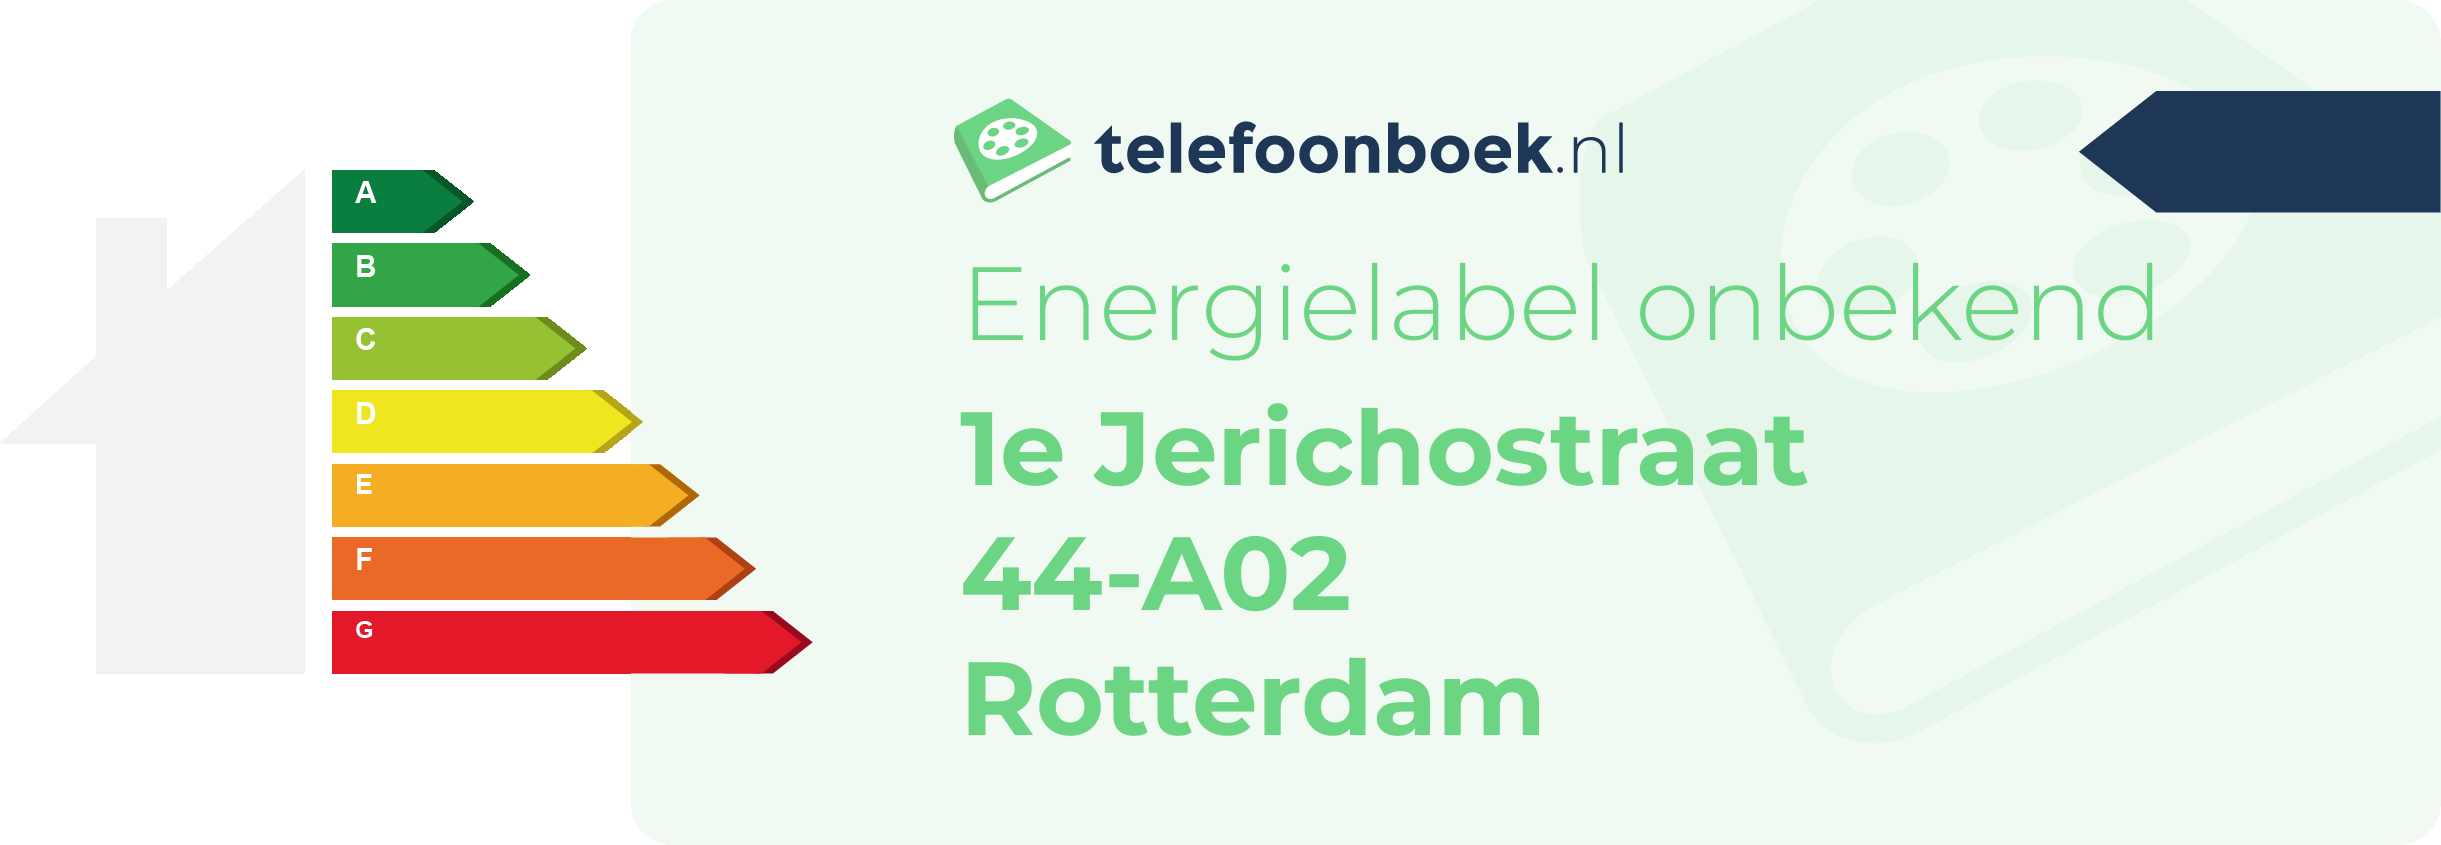 Energielabel 1e Jerichostraat 44-A02 Rotterdam